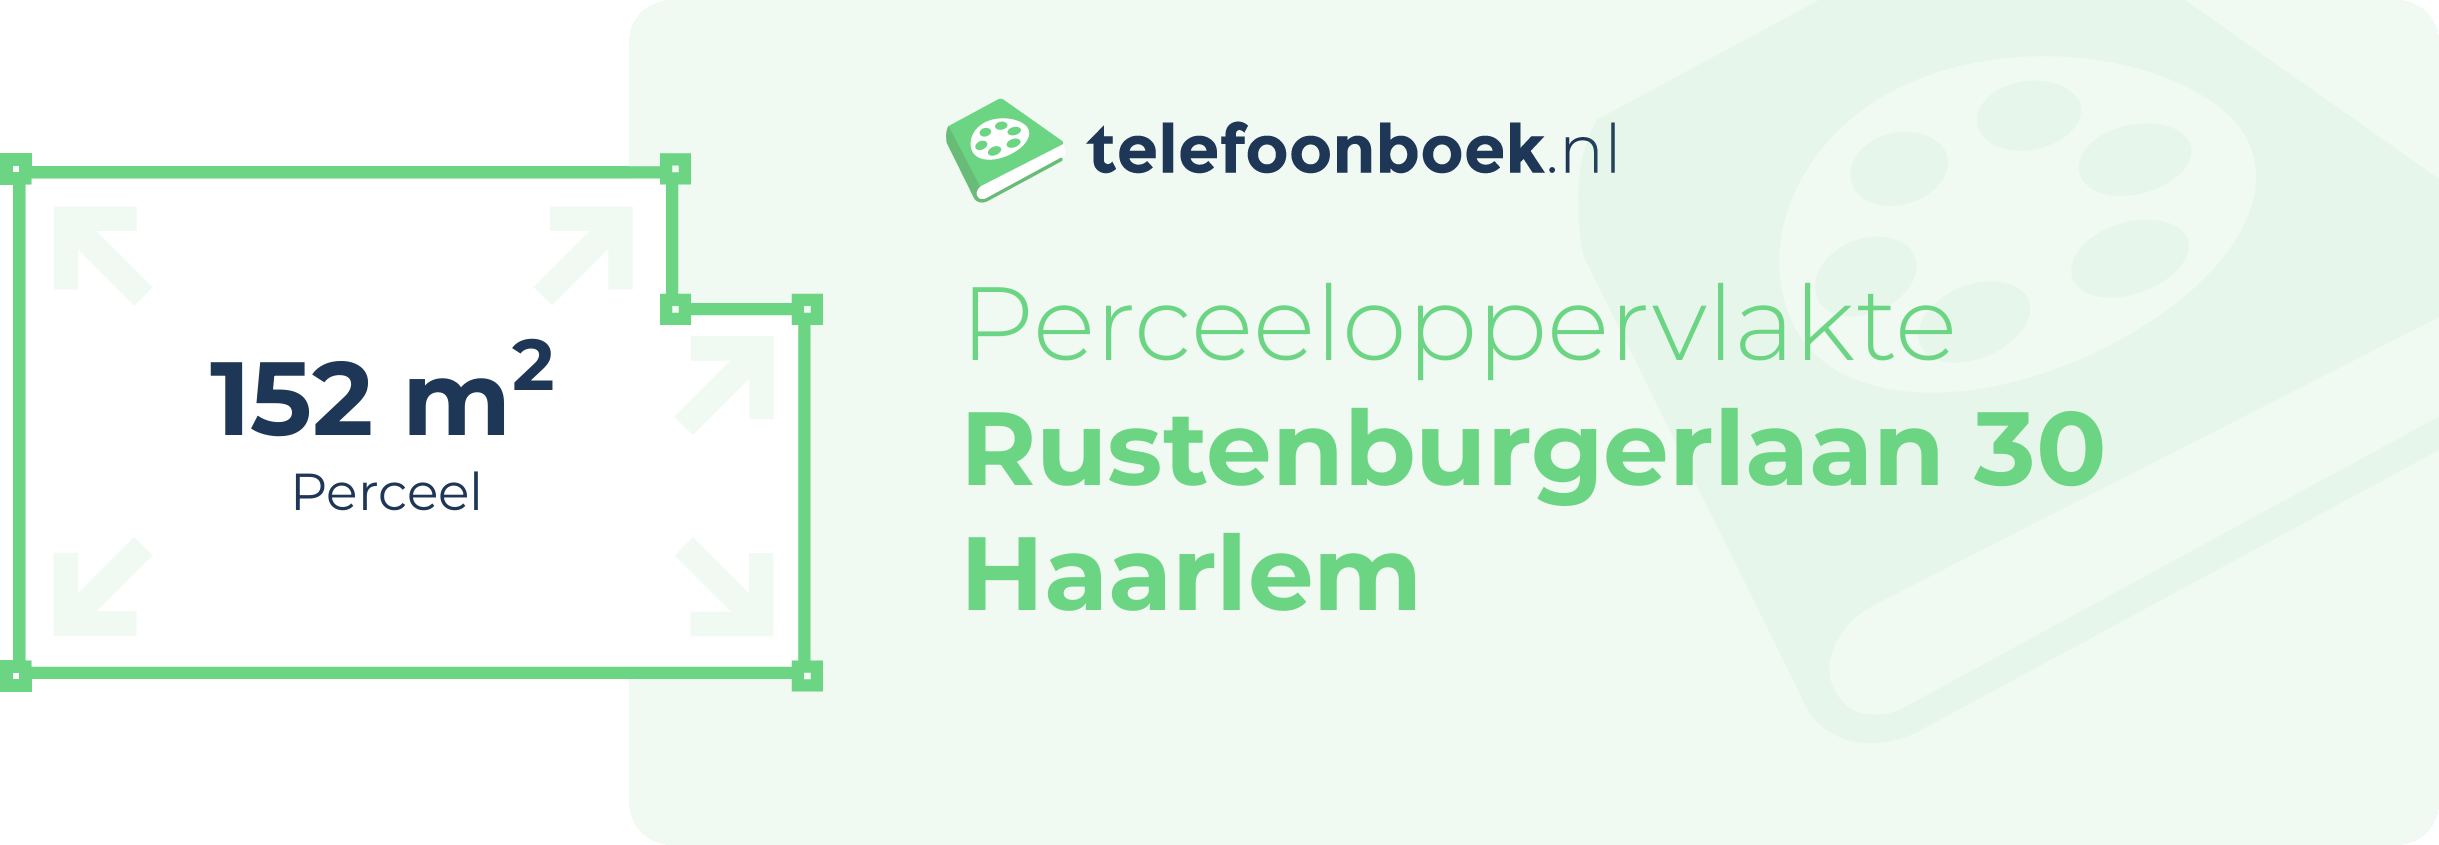 Perceeloppervlakte Rustenburgerlaan 30 Haarlem